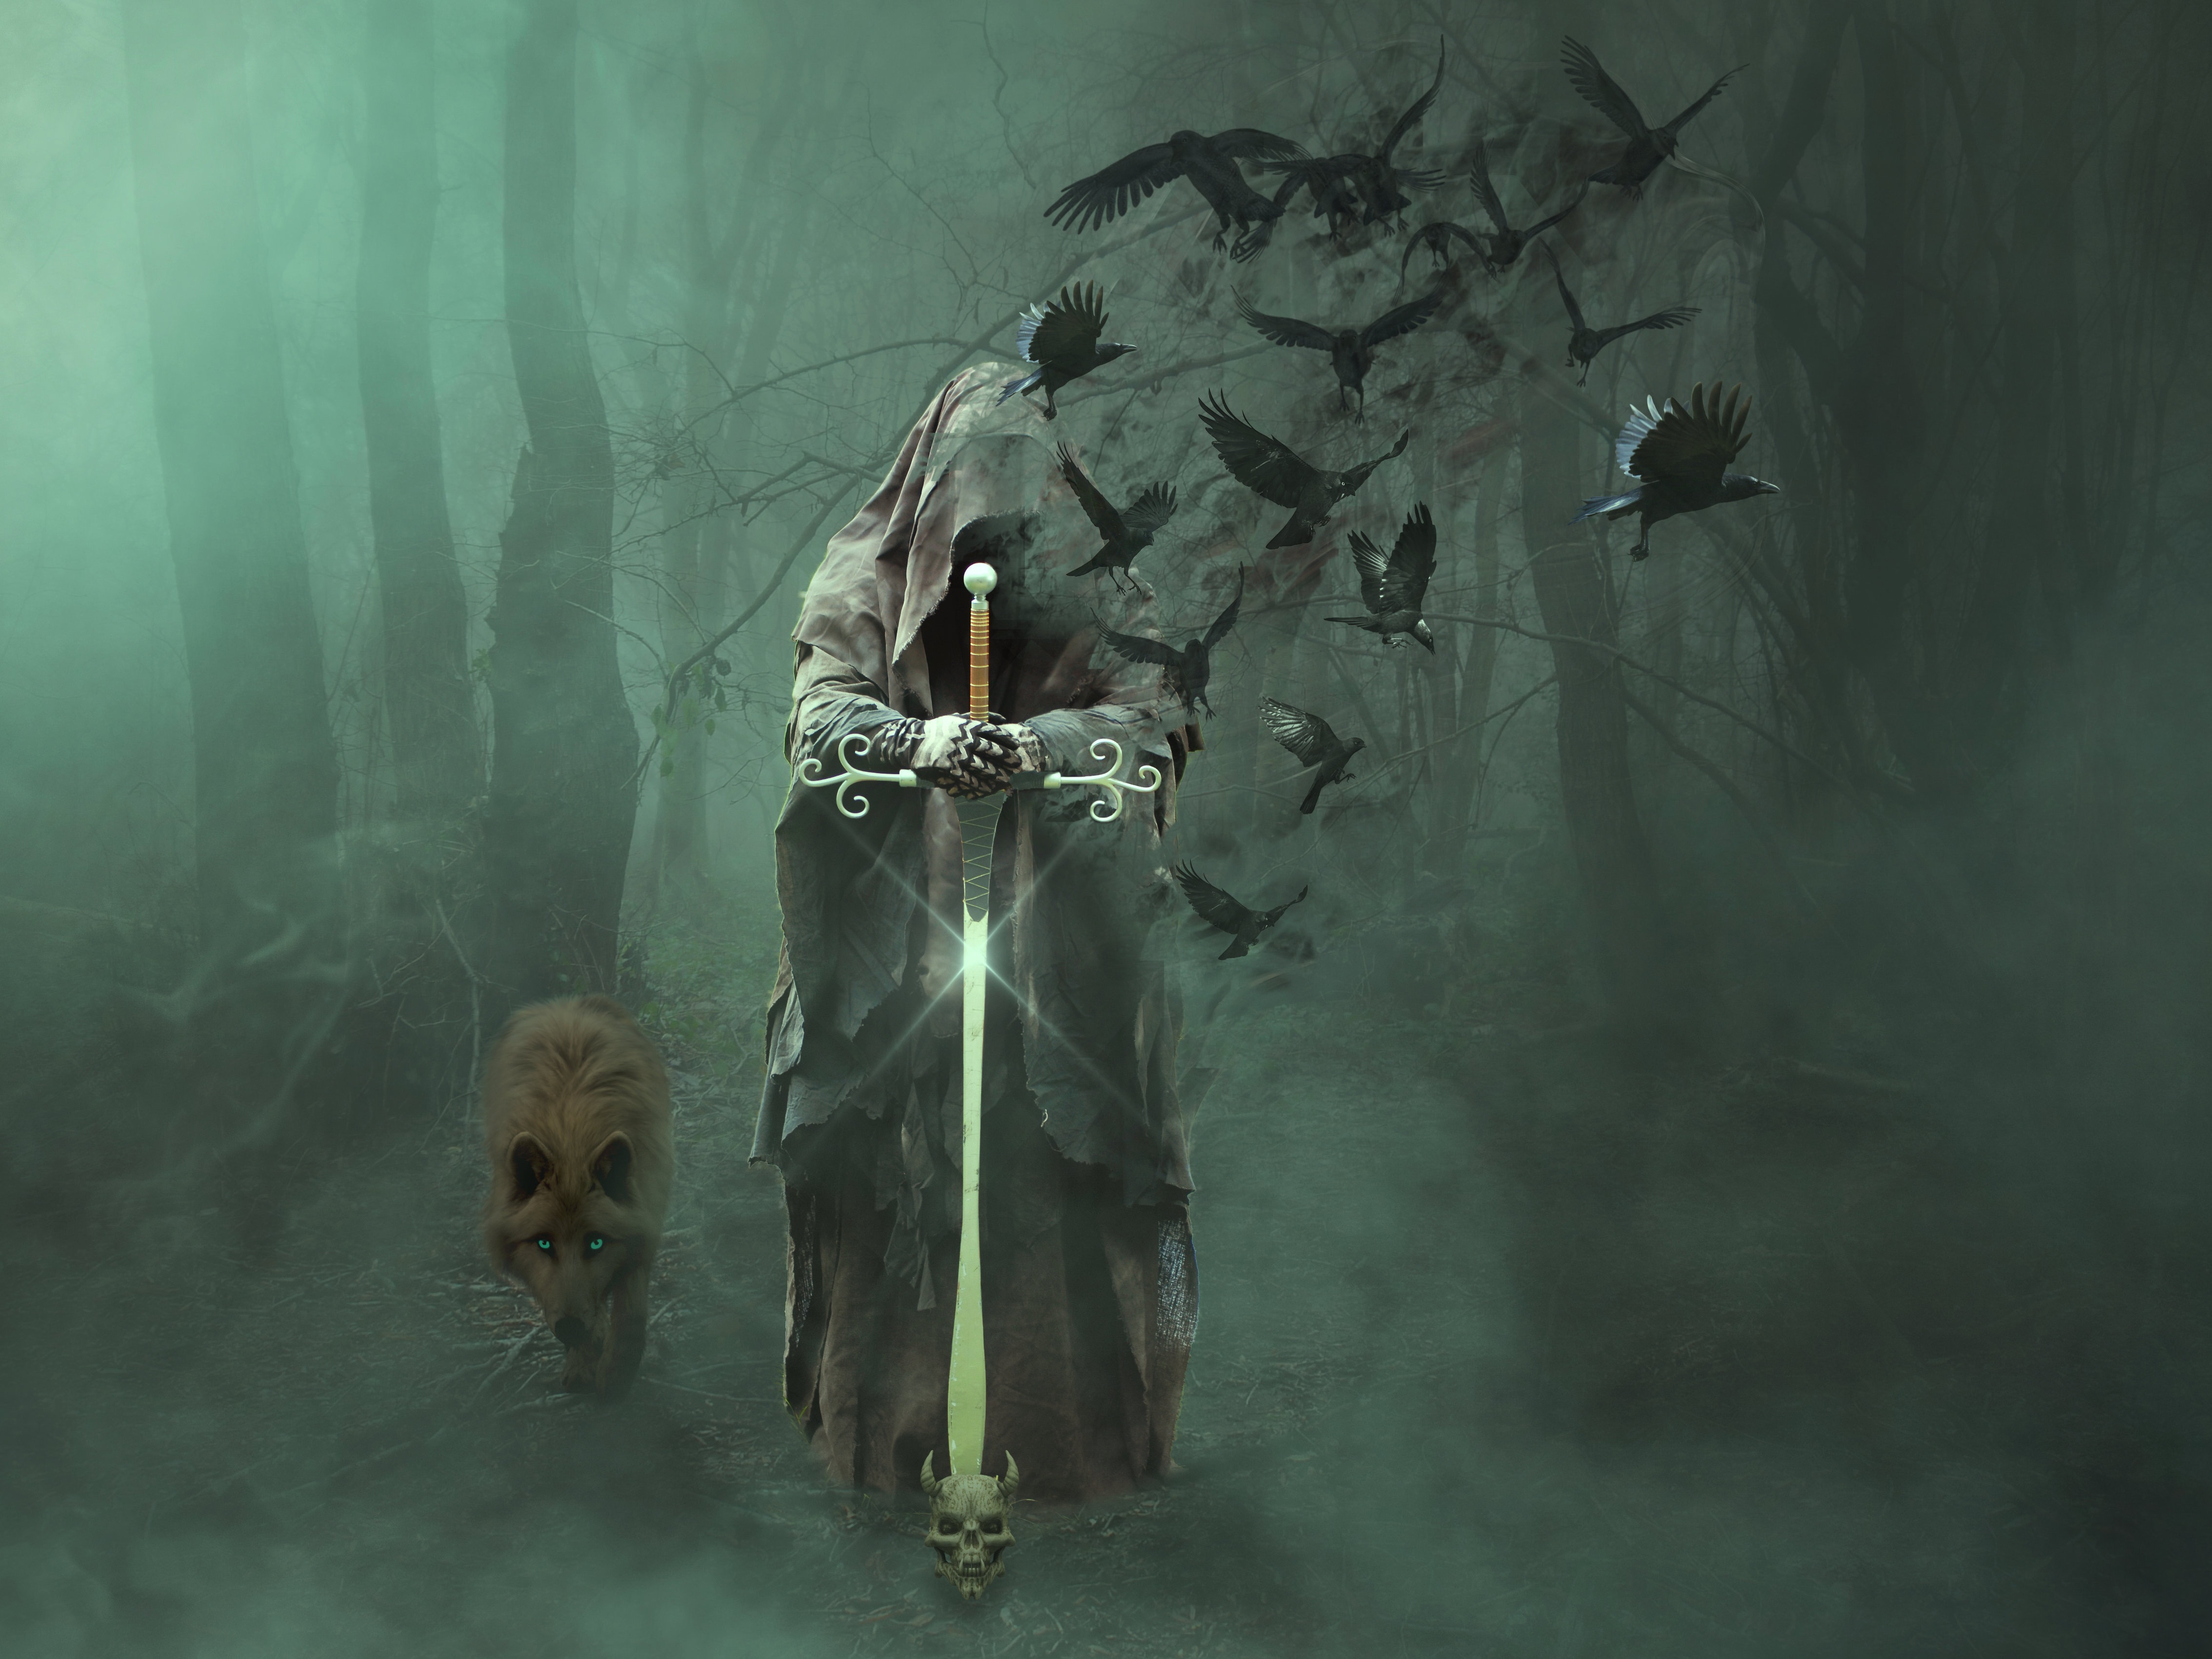 Wizard of Death in a Dark Forest by Lothar Dieterich